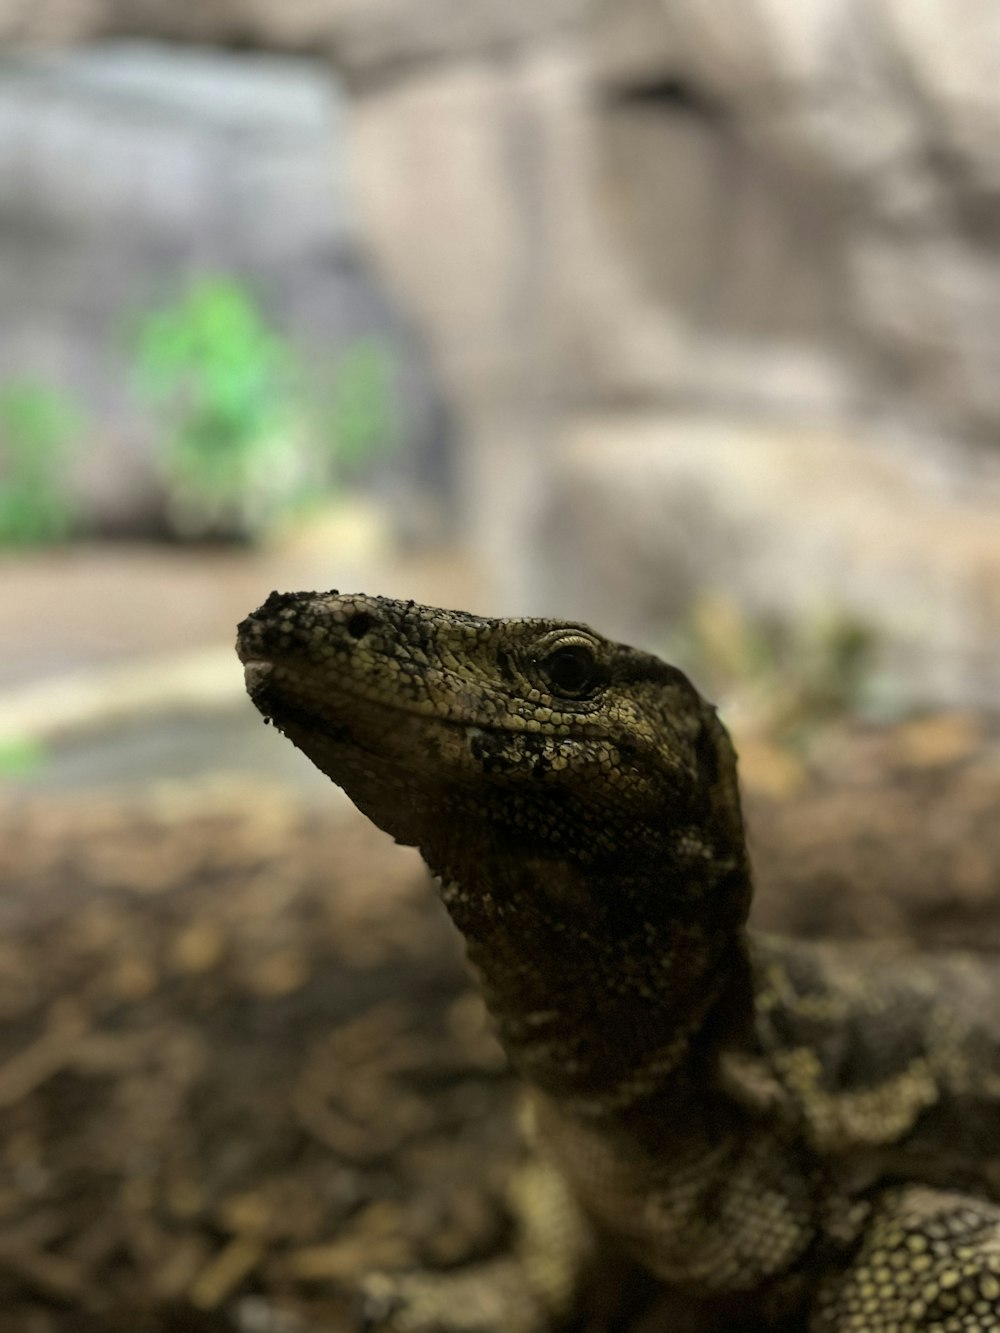 a close up of a lizard in a zoo enclosure